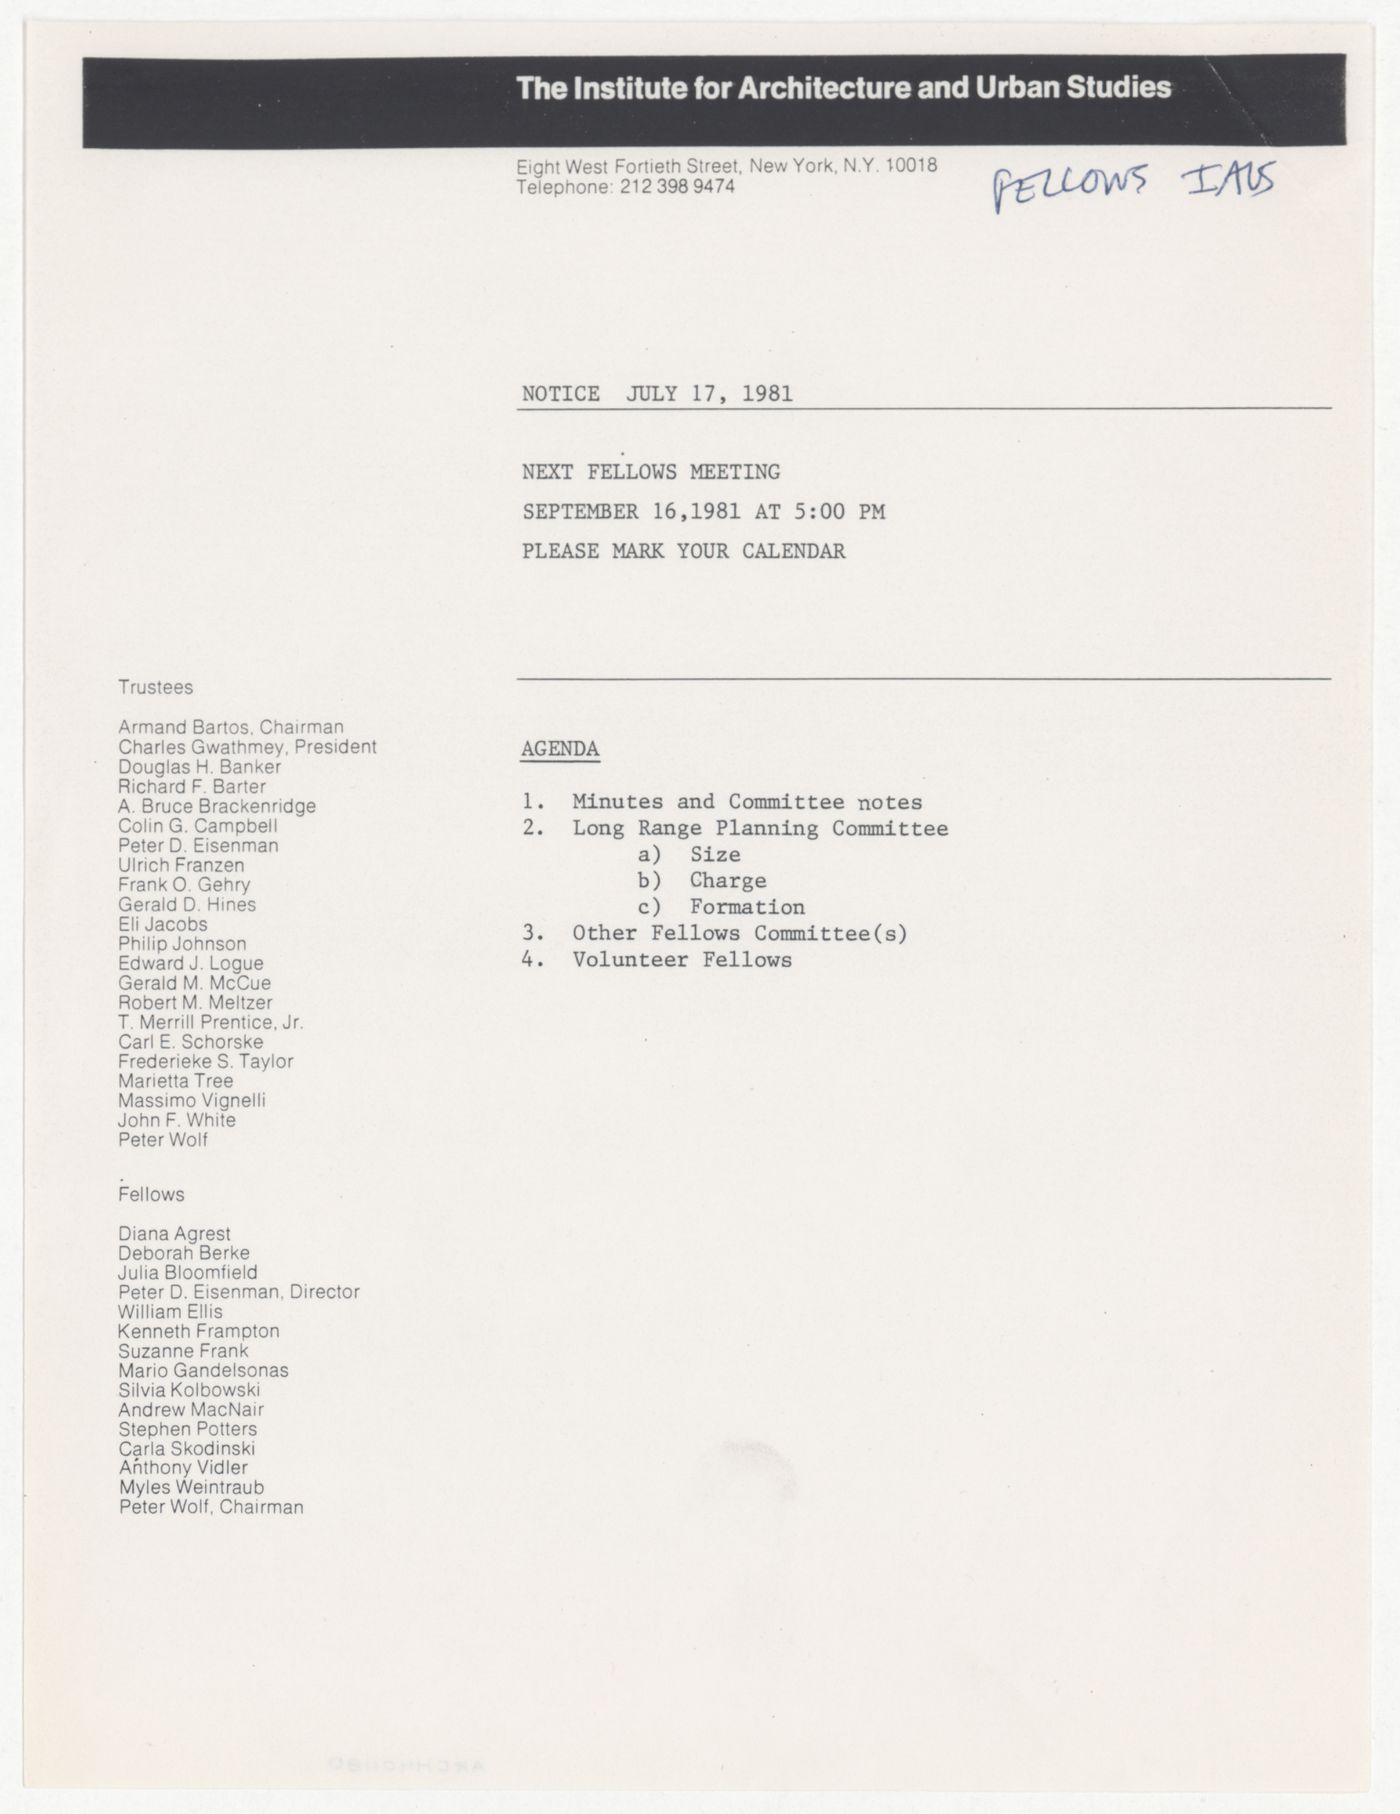 Agenda for meeting of the Fellows on September 16th, 1981